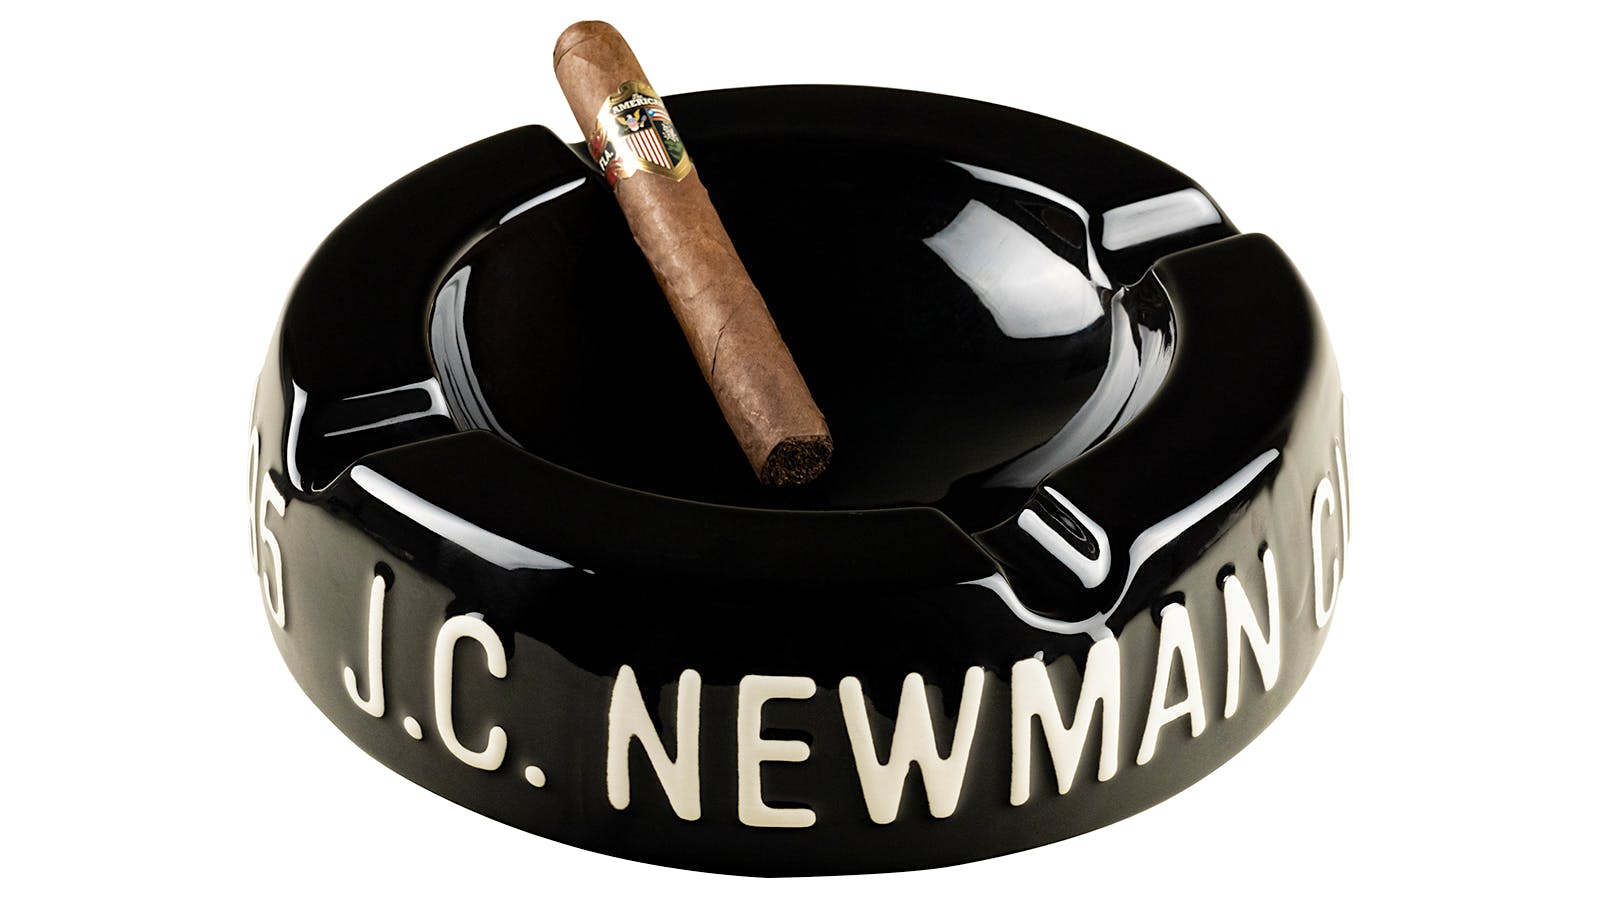 new-ashtrays-by-jc.-newman-have-vintage-look-|-cigar-aficionado